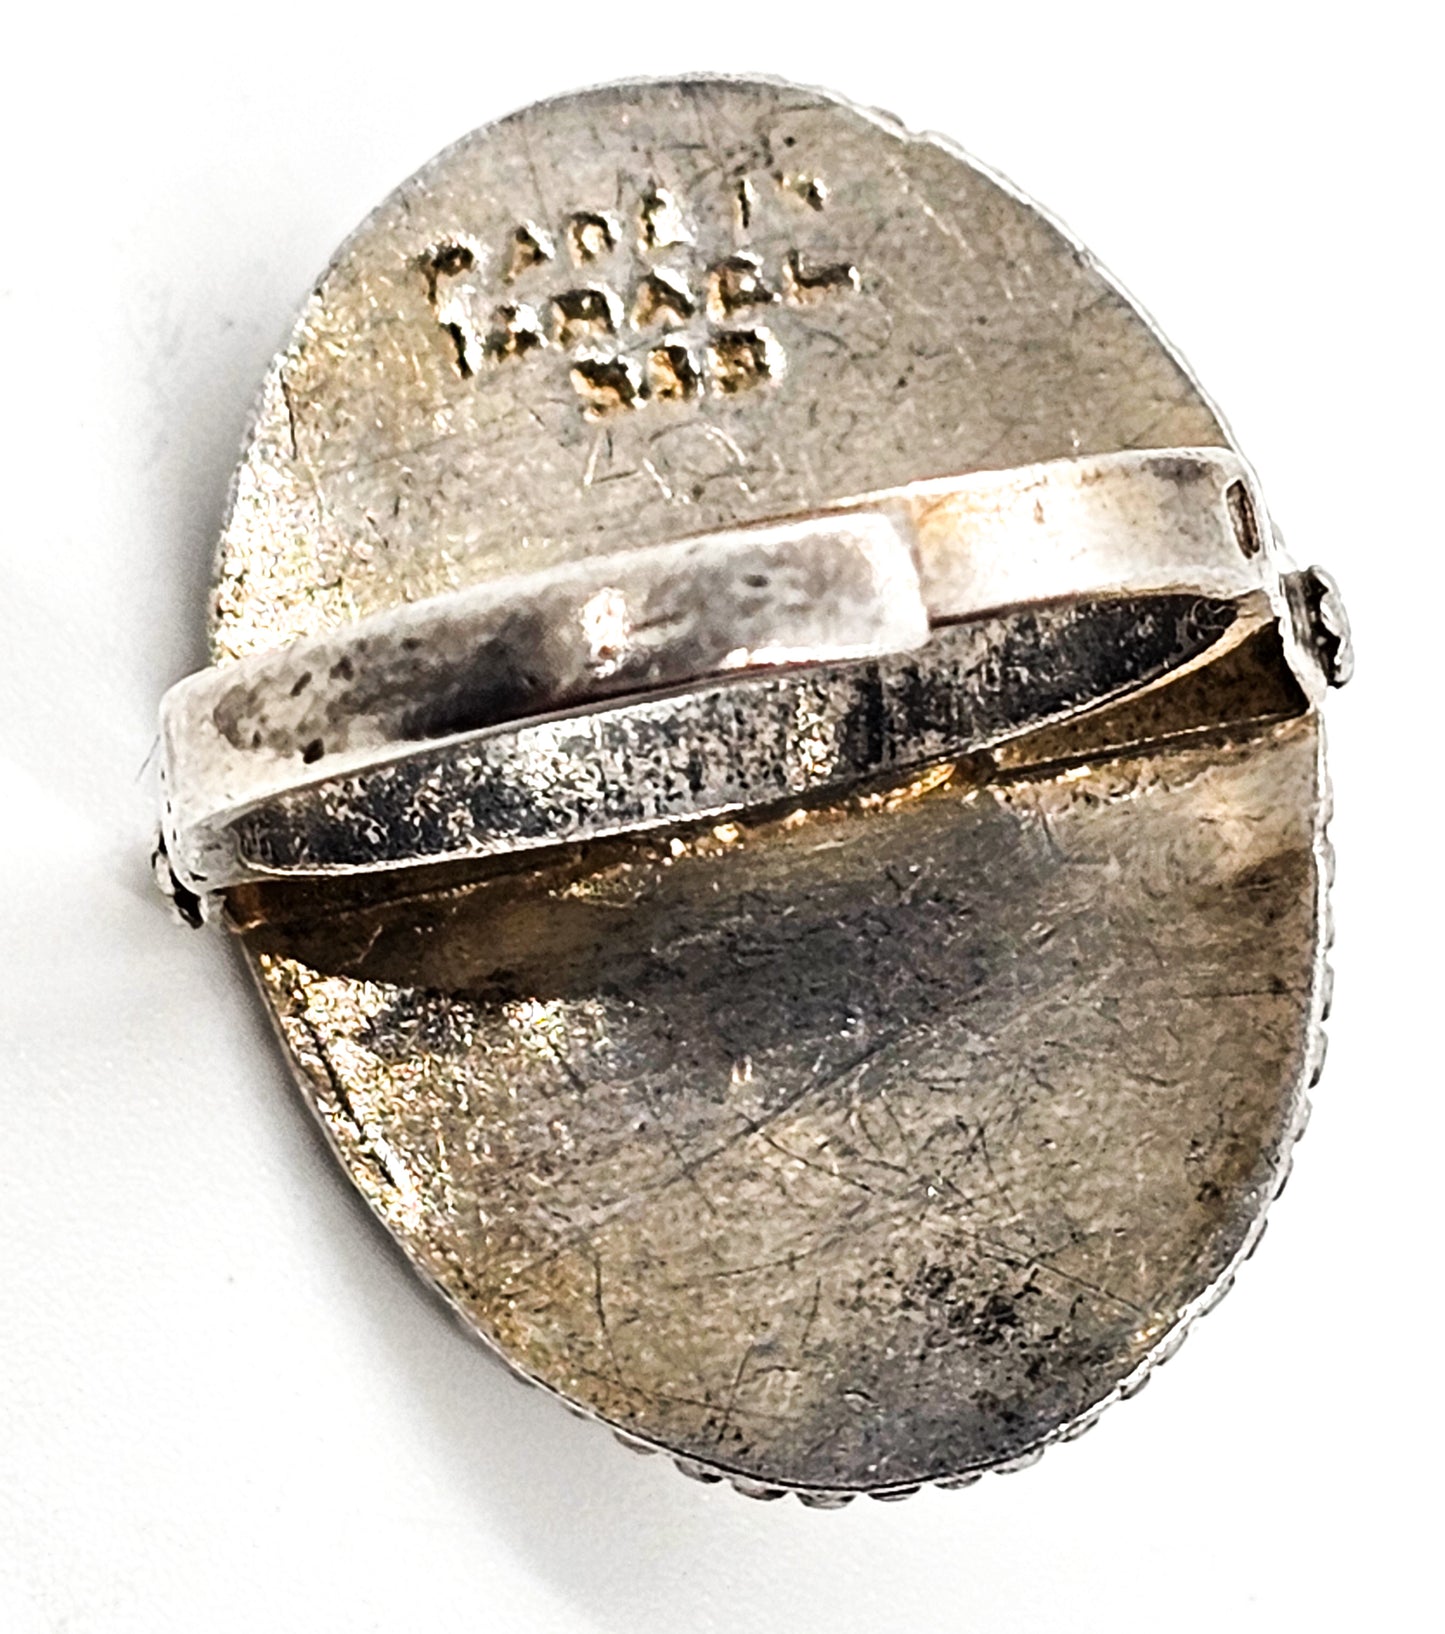 Eilat green chrysocolla Israel vintage large sterling silver adjustable ring size 9.5